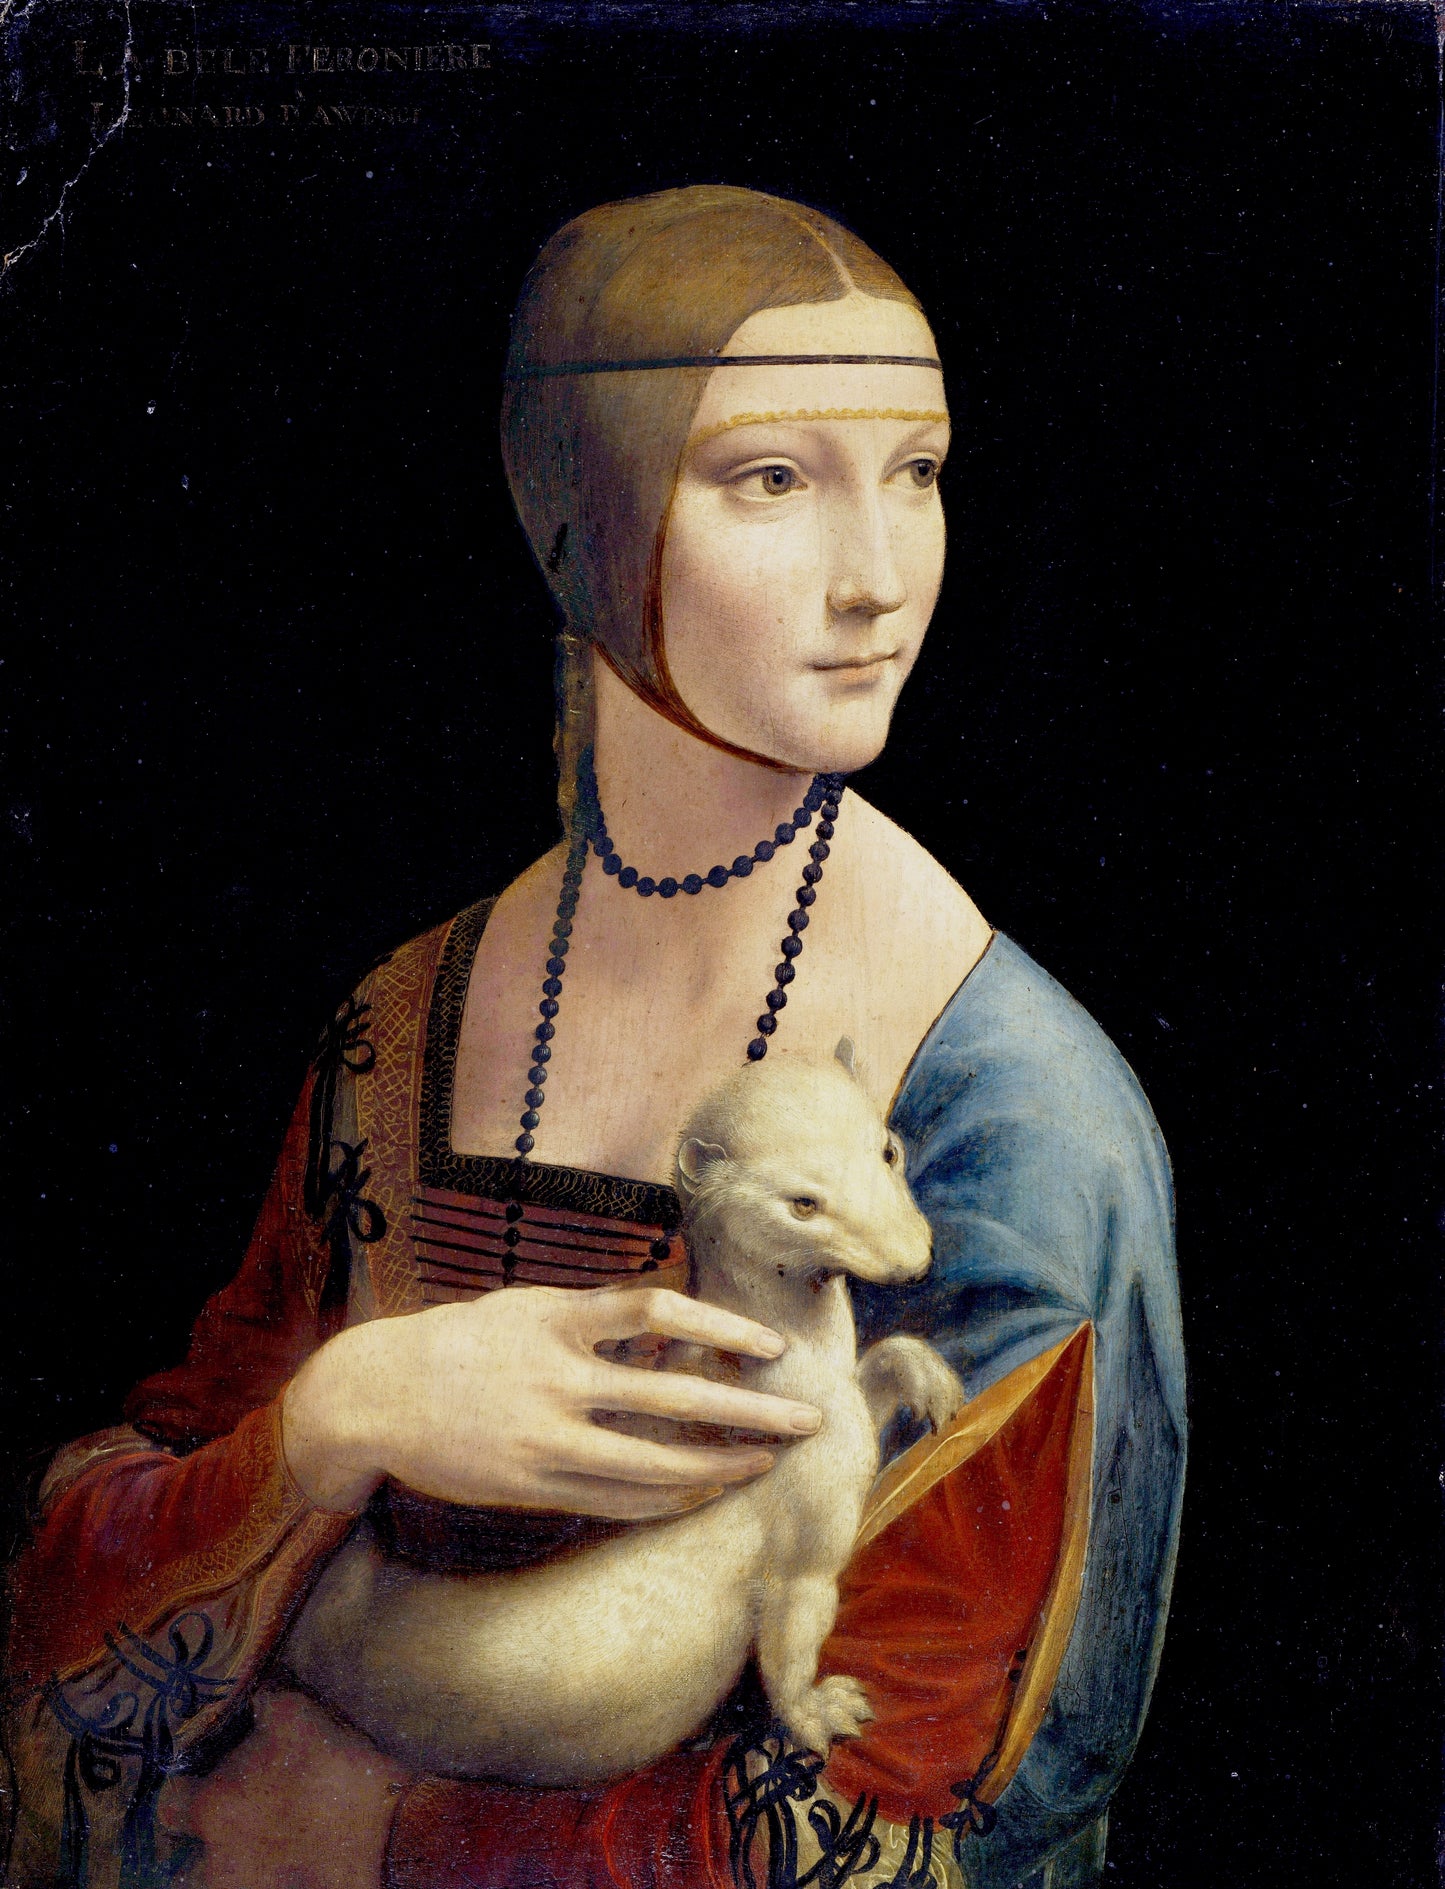 Dtoys - Leonardo da Vinci: Lady with an Ermine - 1000 Piece Jigsaw Puzzle